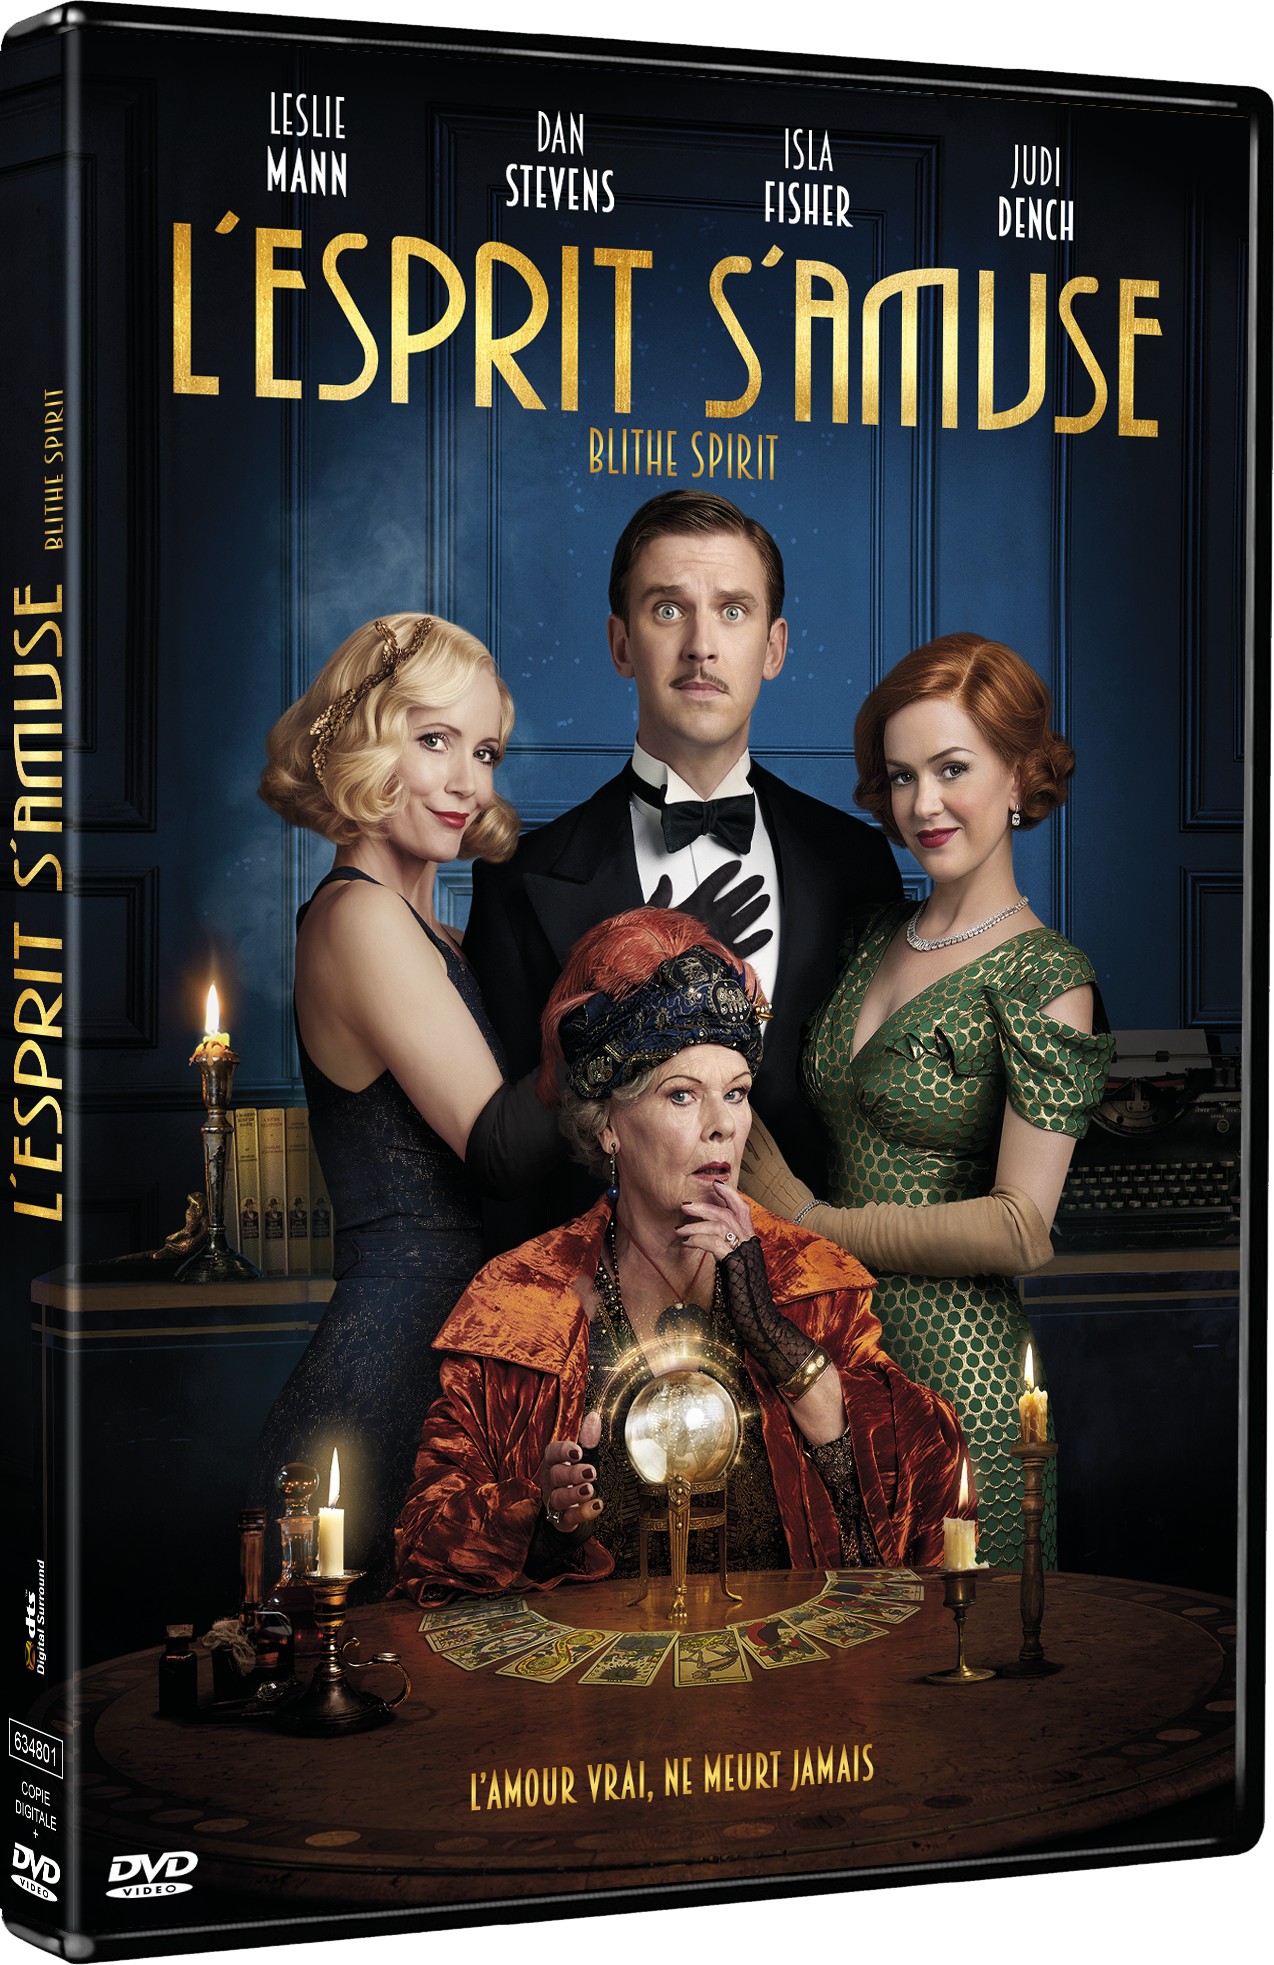 L'ESPRIT S'AMUSE - DVD